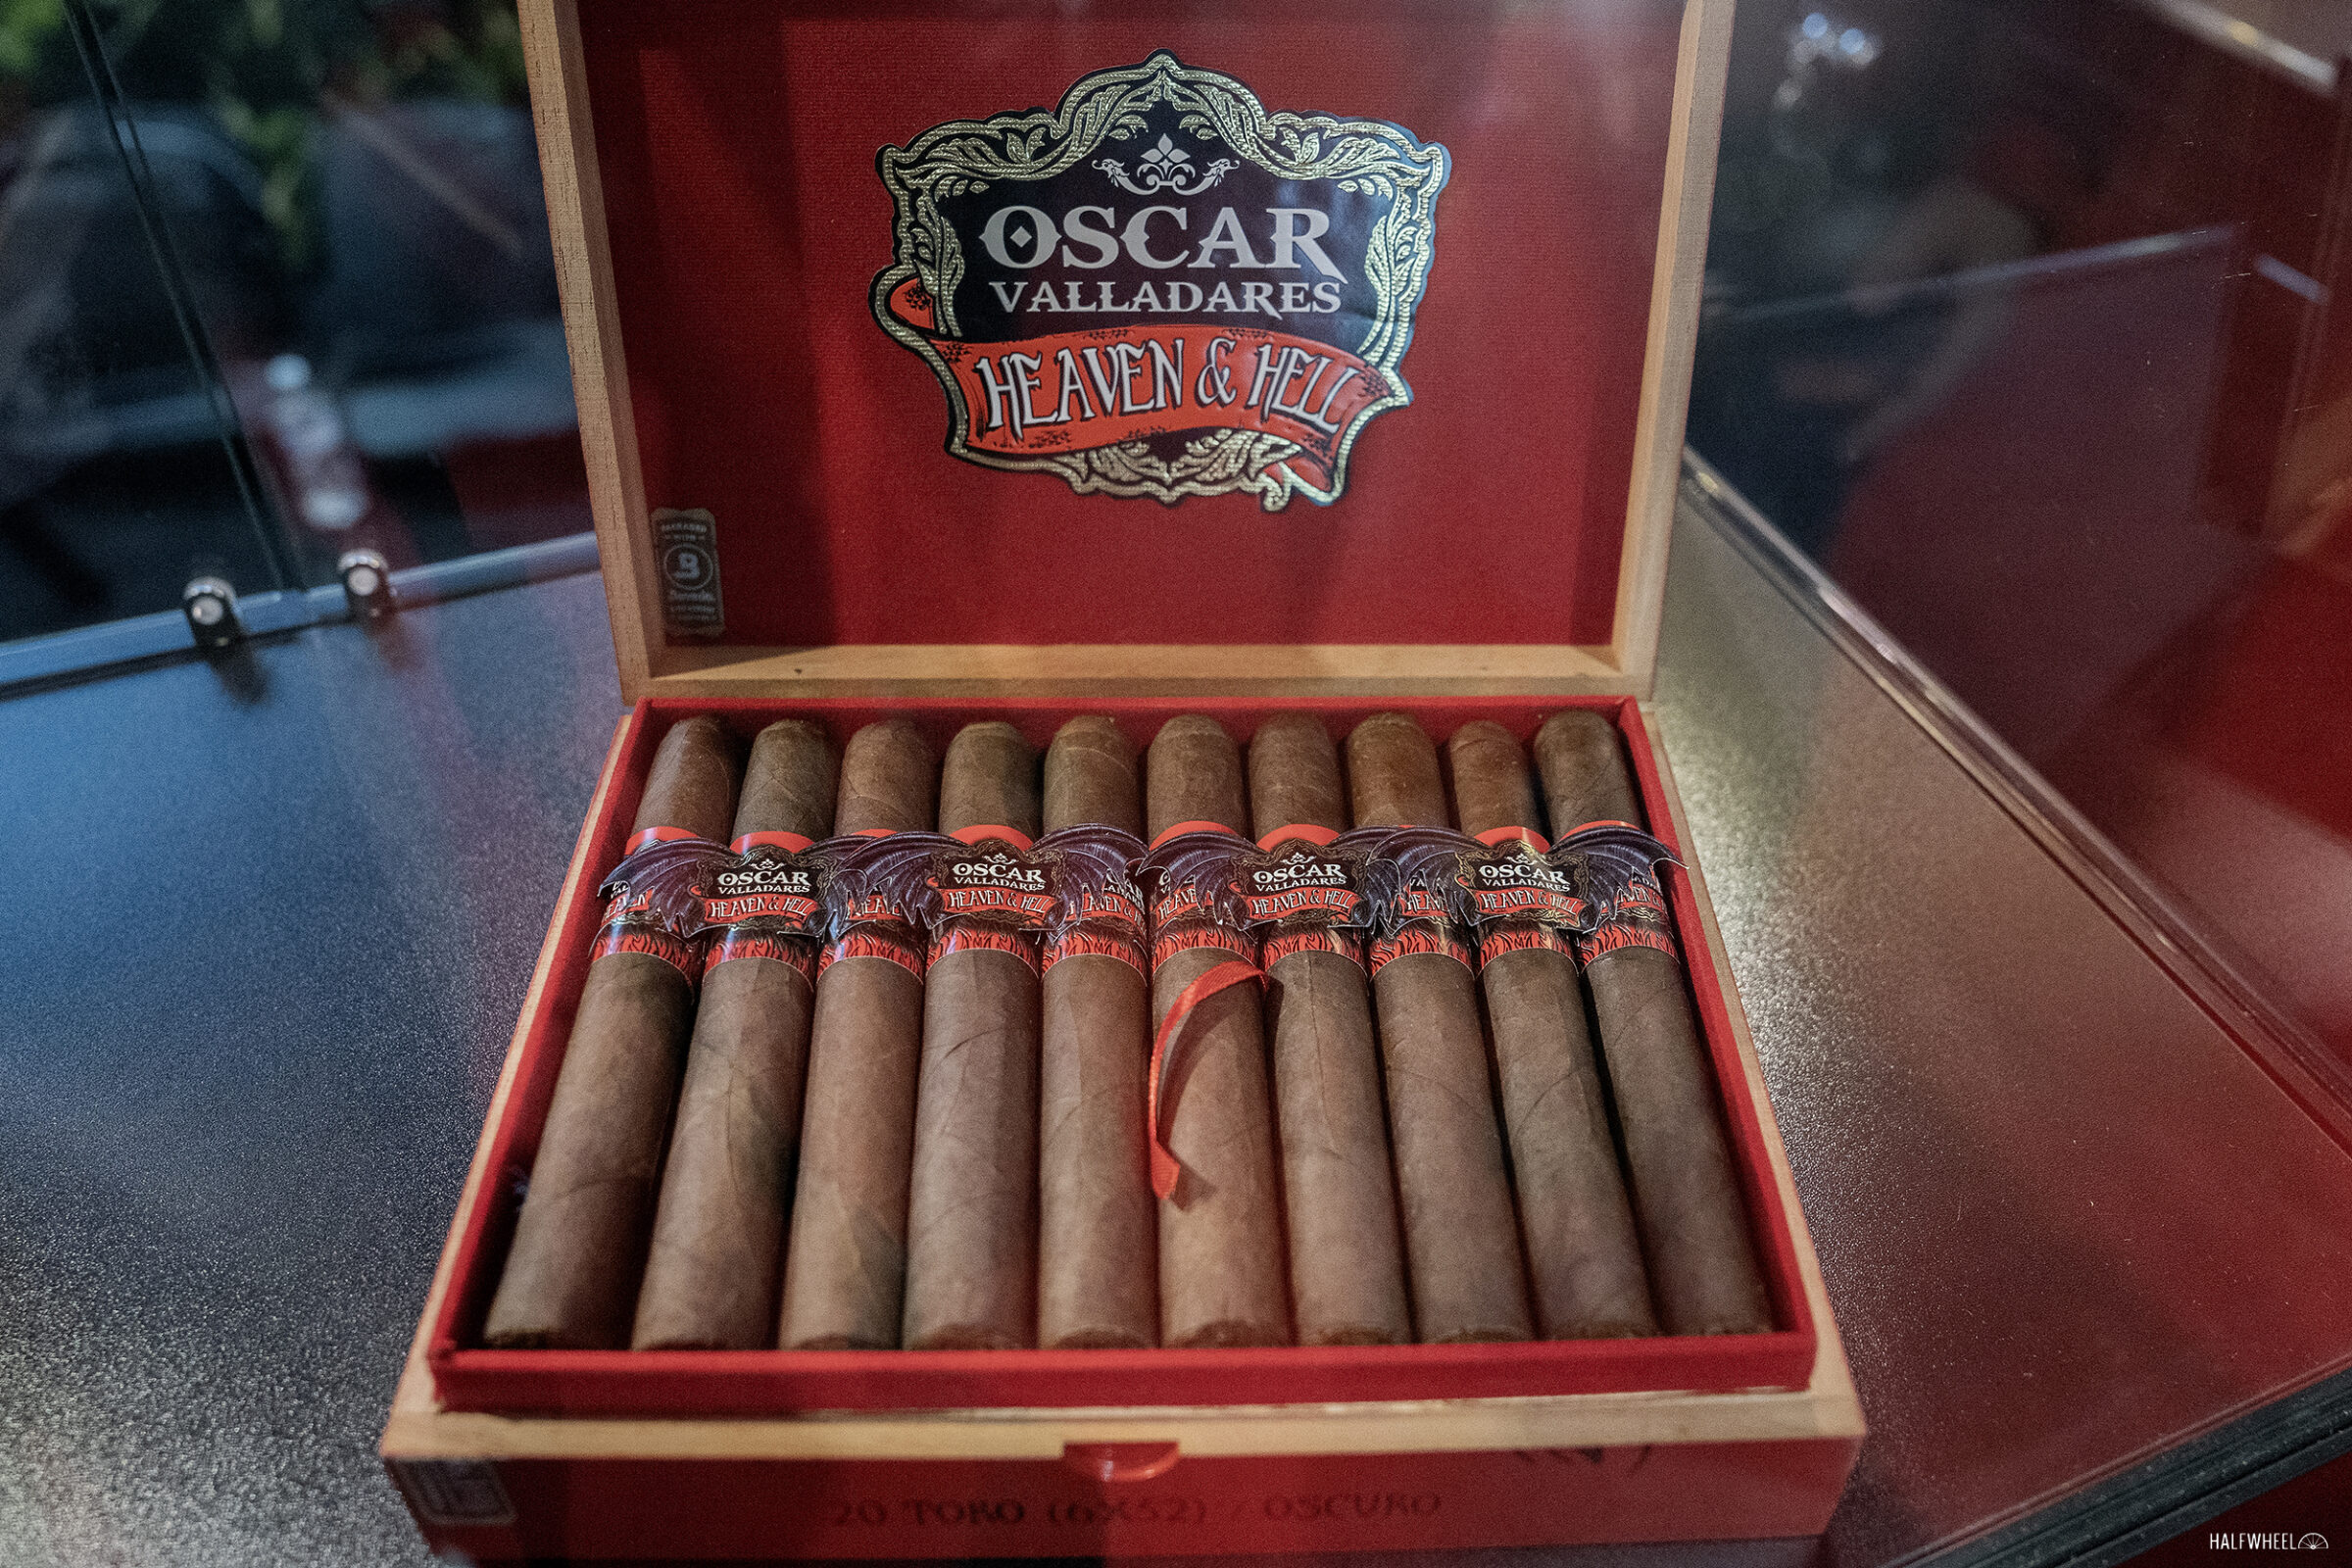 Dama Valada - Buy Premium Cigars Online From 2 Guys Cigars